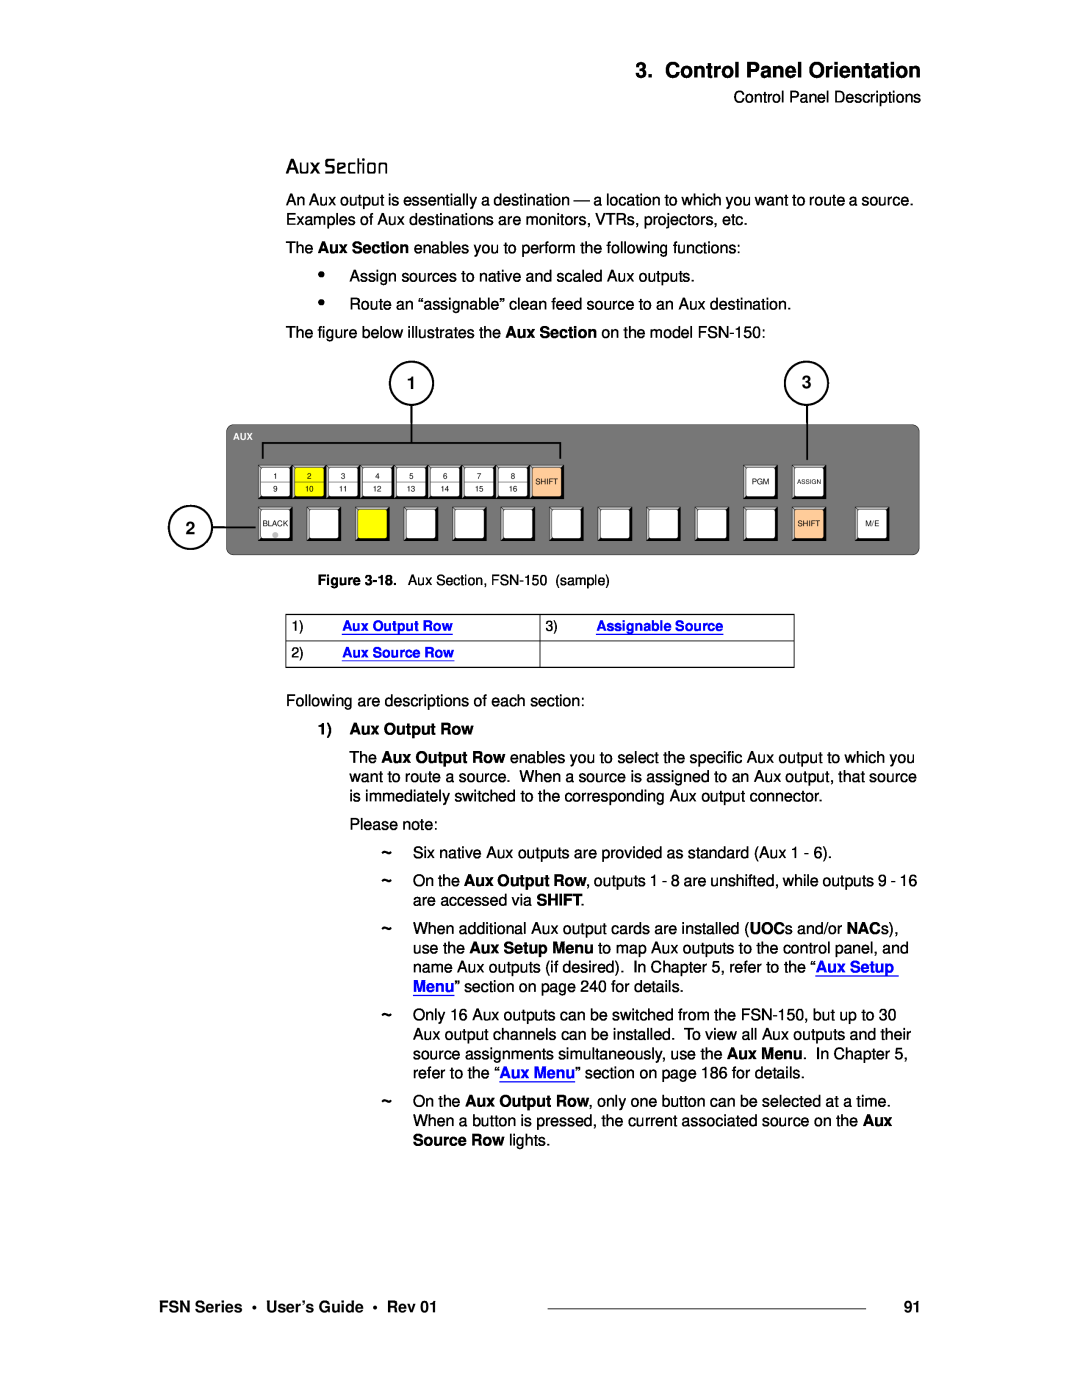 Barco 26-0702000-00 manual ìñ=pÉÅíáçå, 1Aux Output Row, Control Panel Orientation, FSN Series • User’s Guide • Rev 